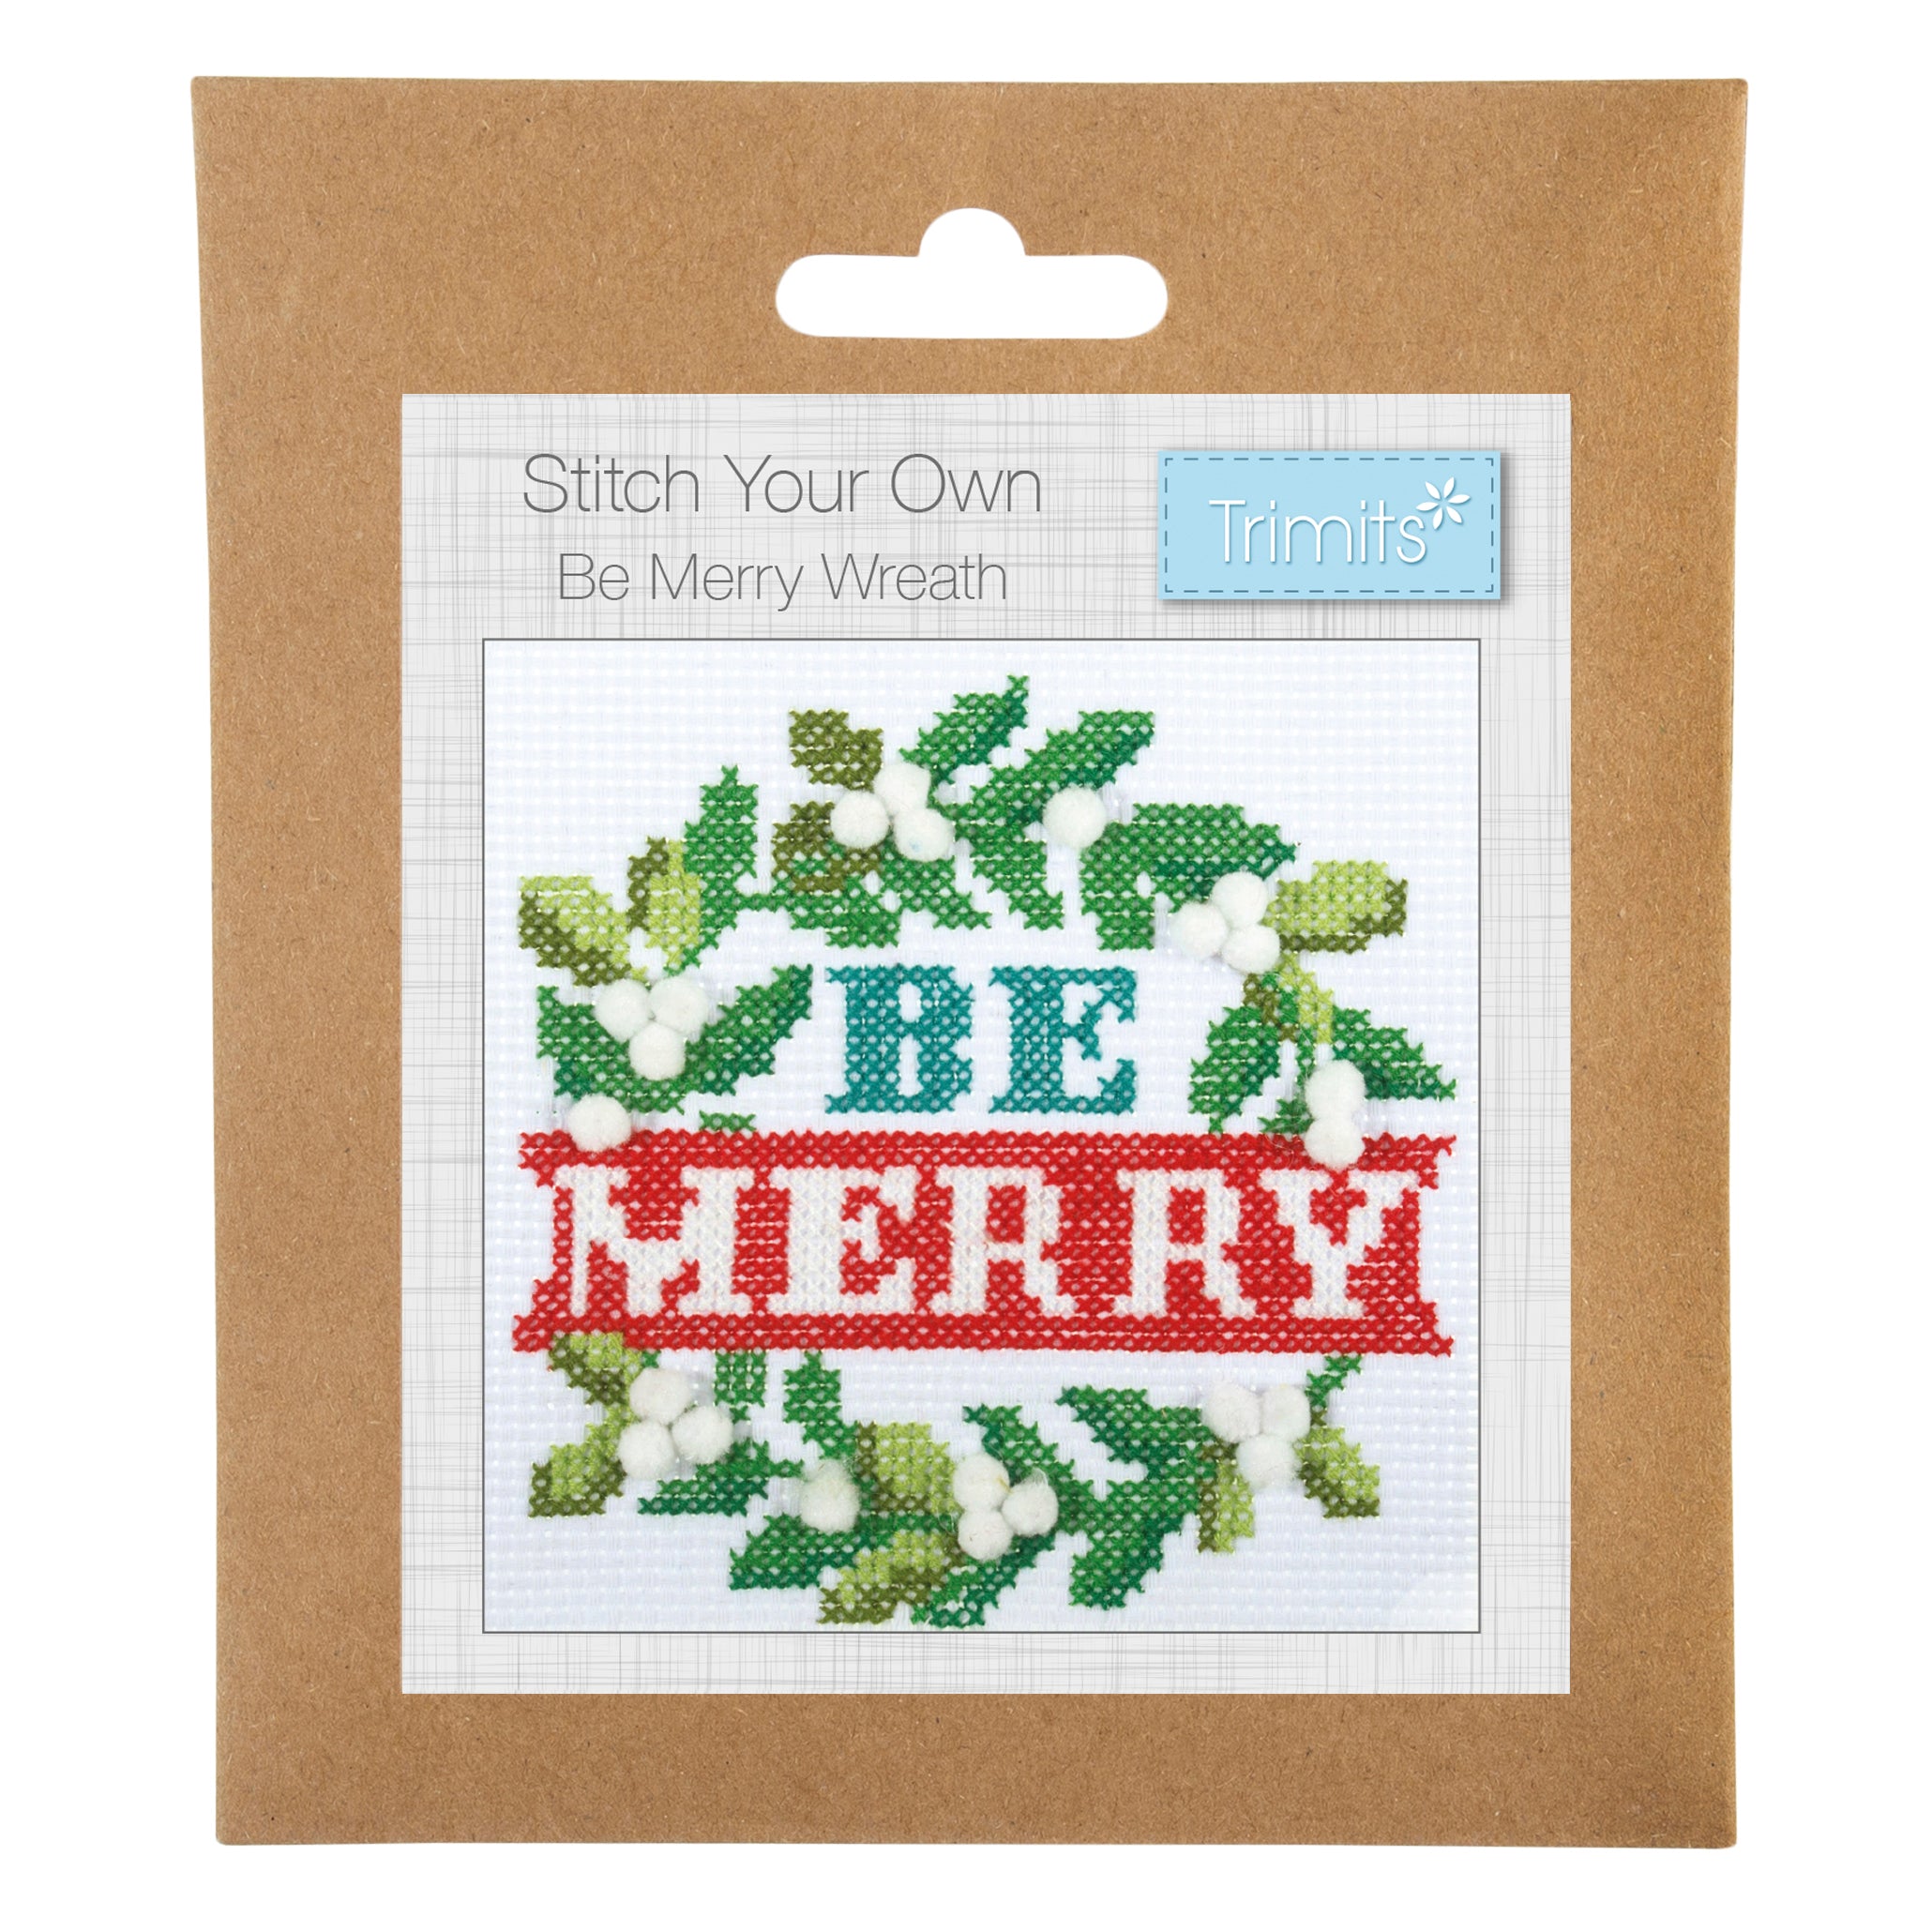 Trimits Festive Cross Stitch Kit: Be Merry Wreath